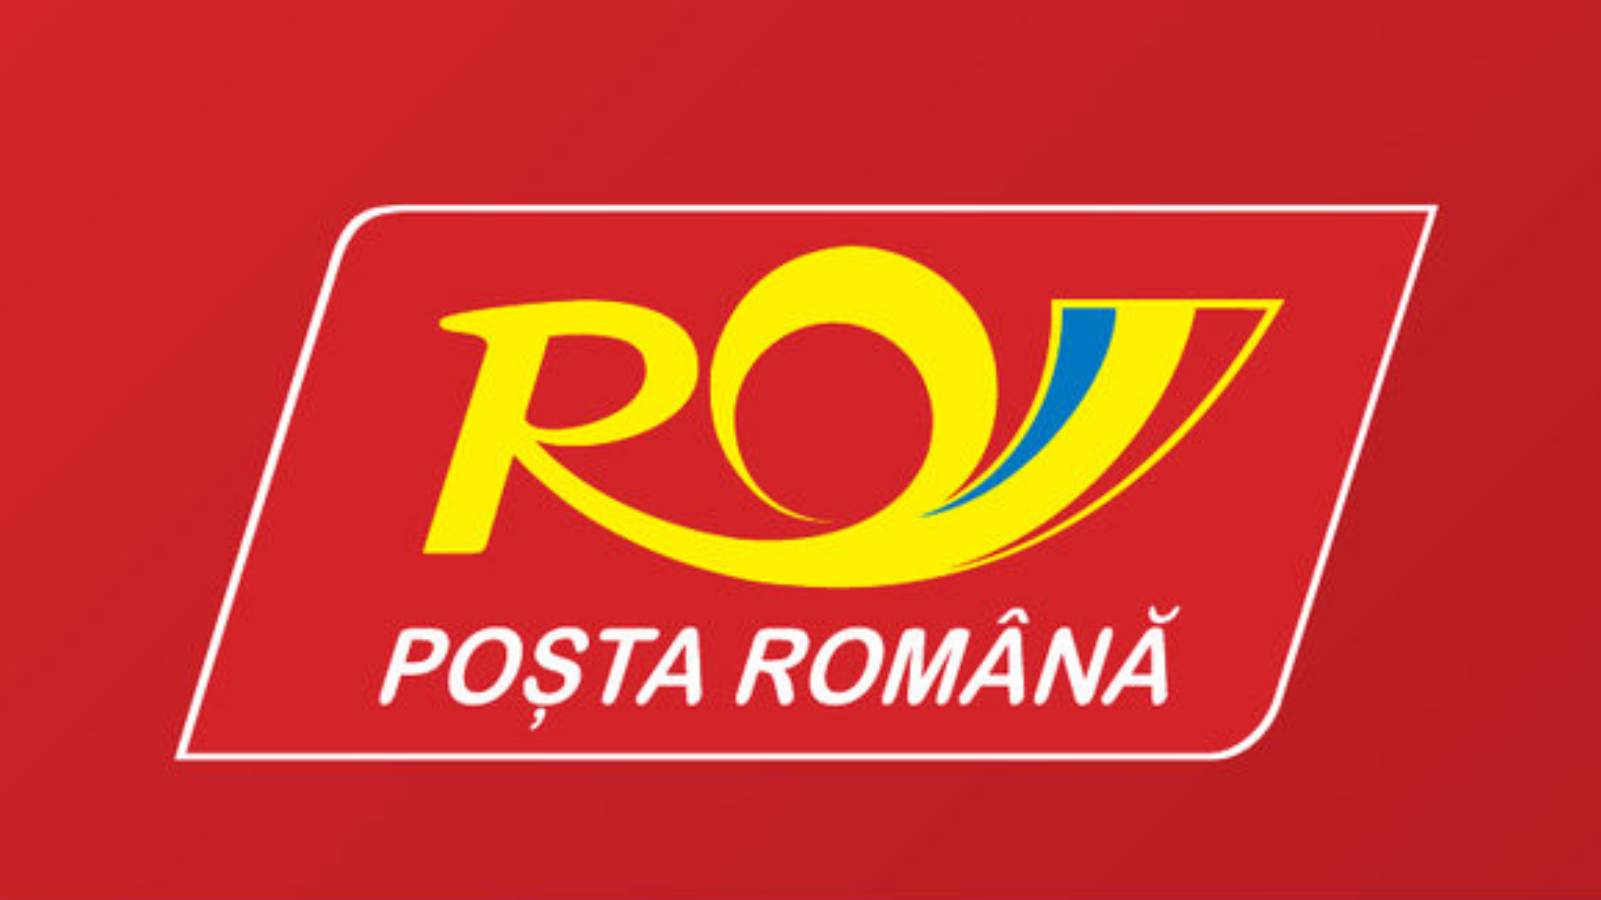 Rumänischer Post-Expressversand